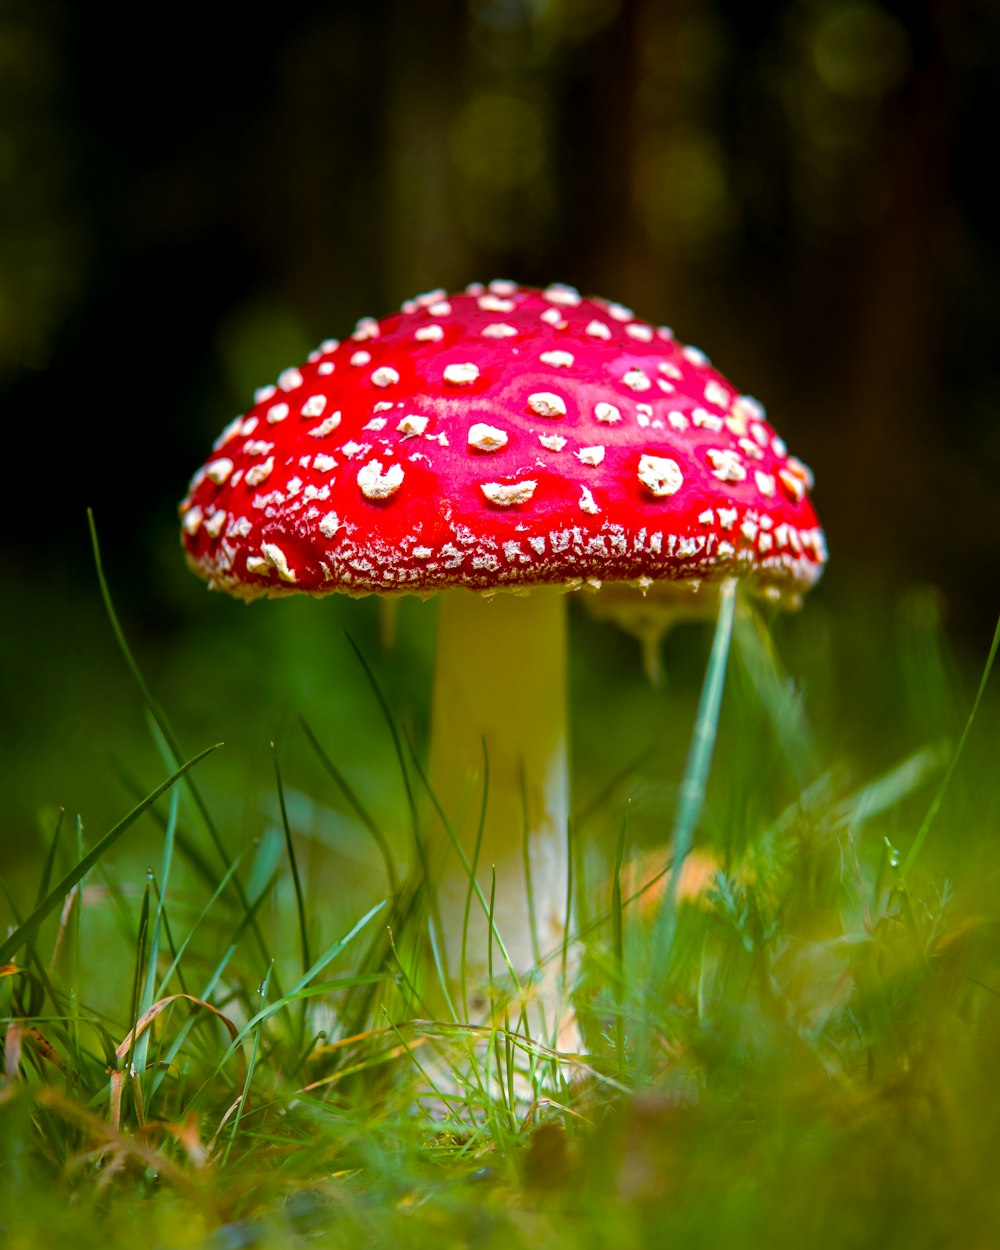 champignon rouge et blanc dans l'herbe verte